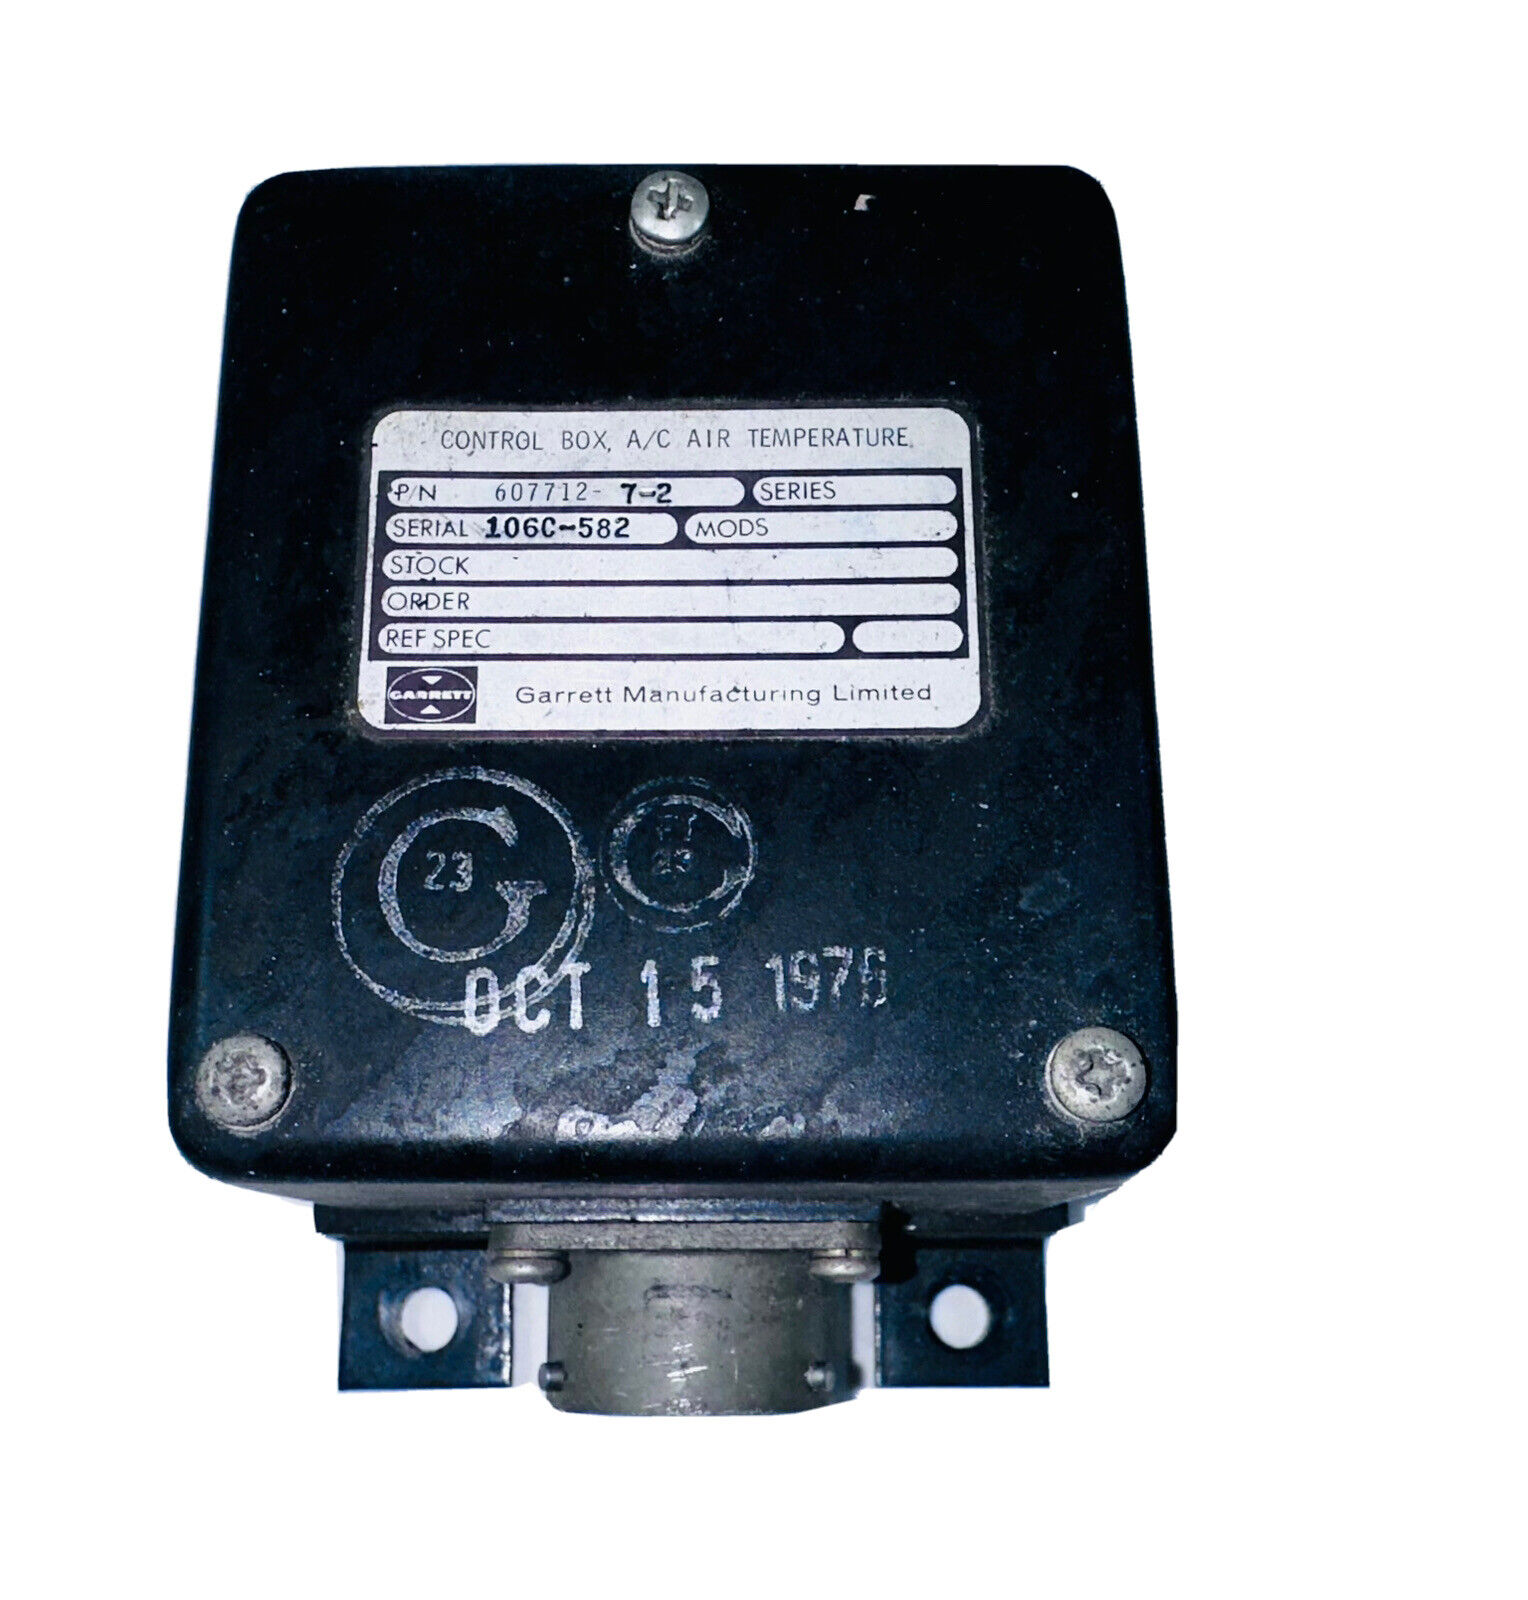 GARRETT 607712-7-2 Control box, AC Air Temperature as removed.  “1 lot of 2each”